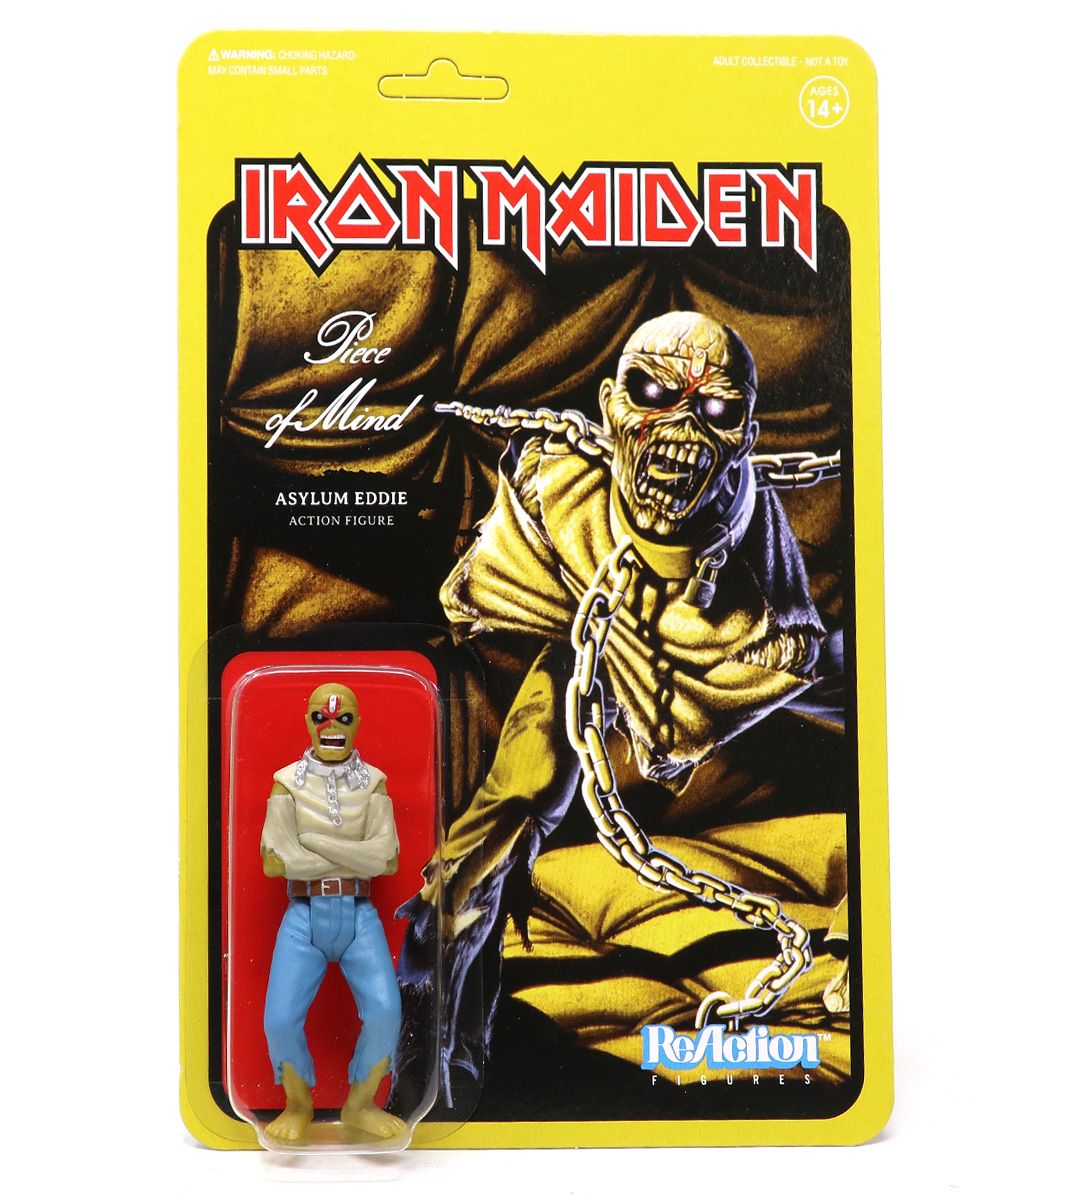 Asylum Eddie - Iron Maiden wave 2 - ReAction figure